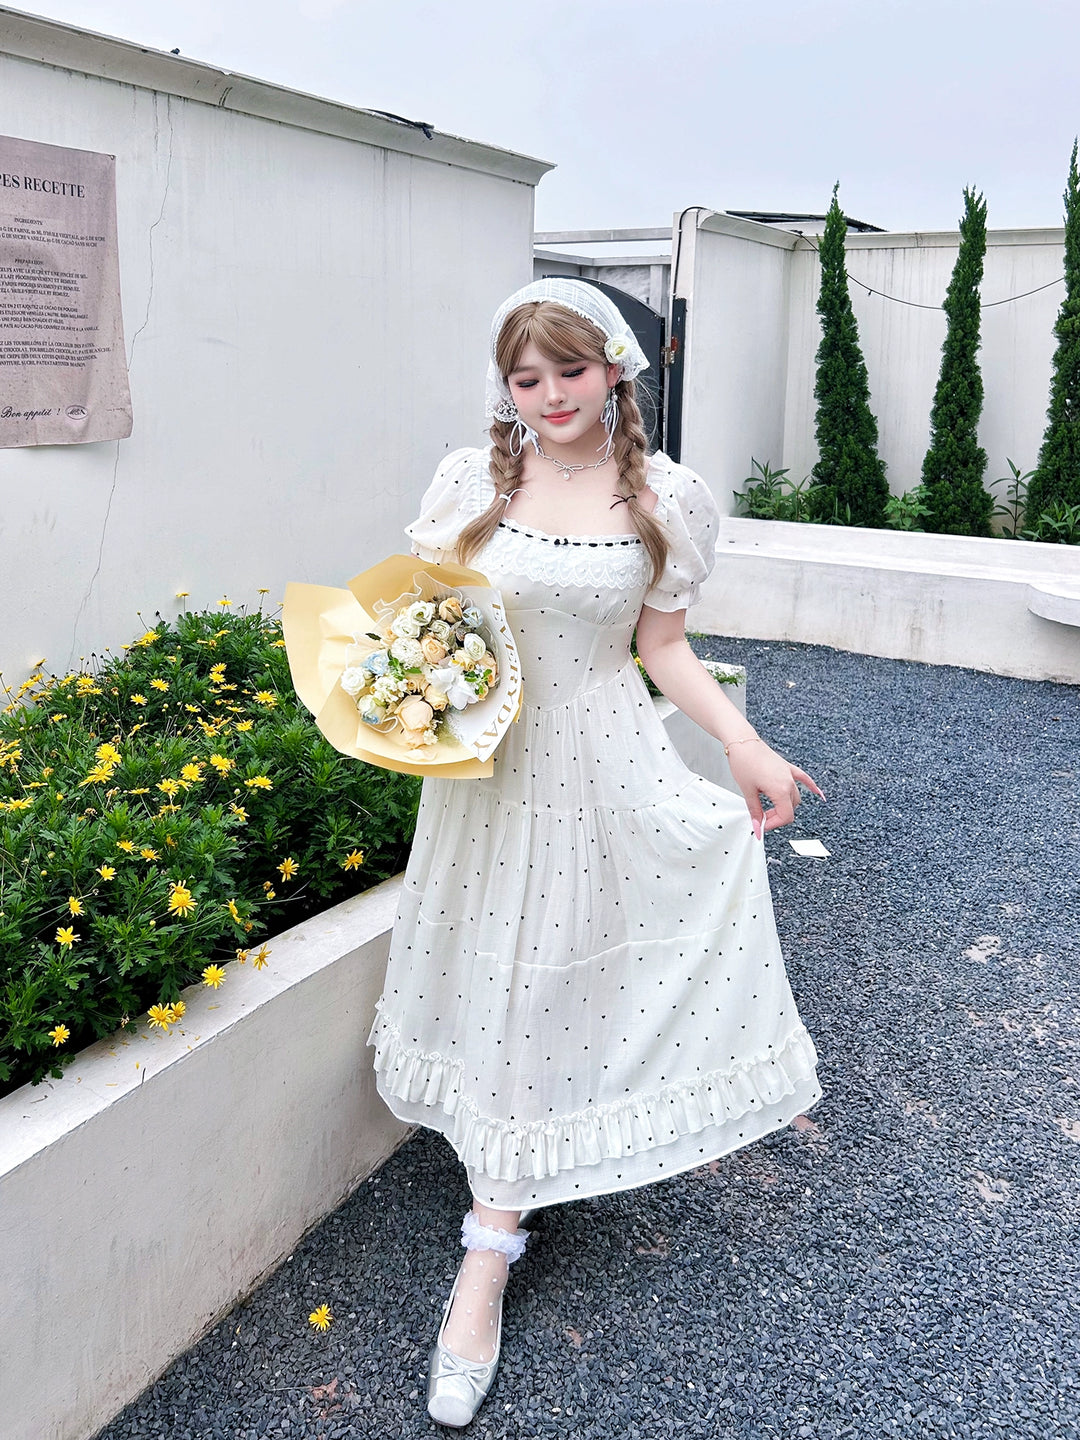 Yingtang~Plus Size Lolita Dress Polka Dot White Black Short Sleeve OP white dress XL 